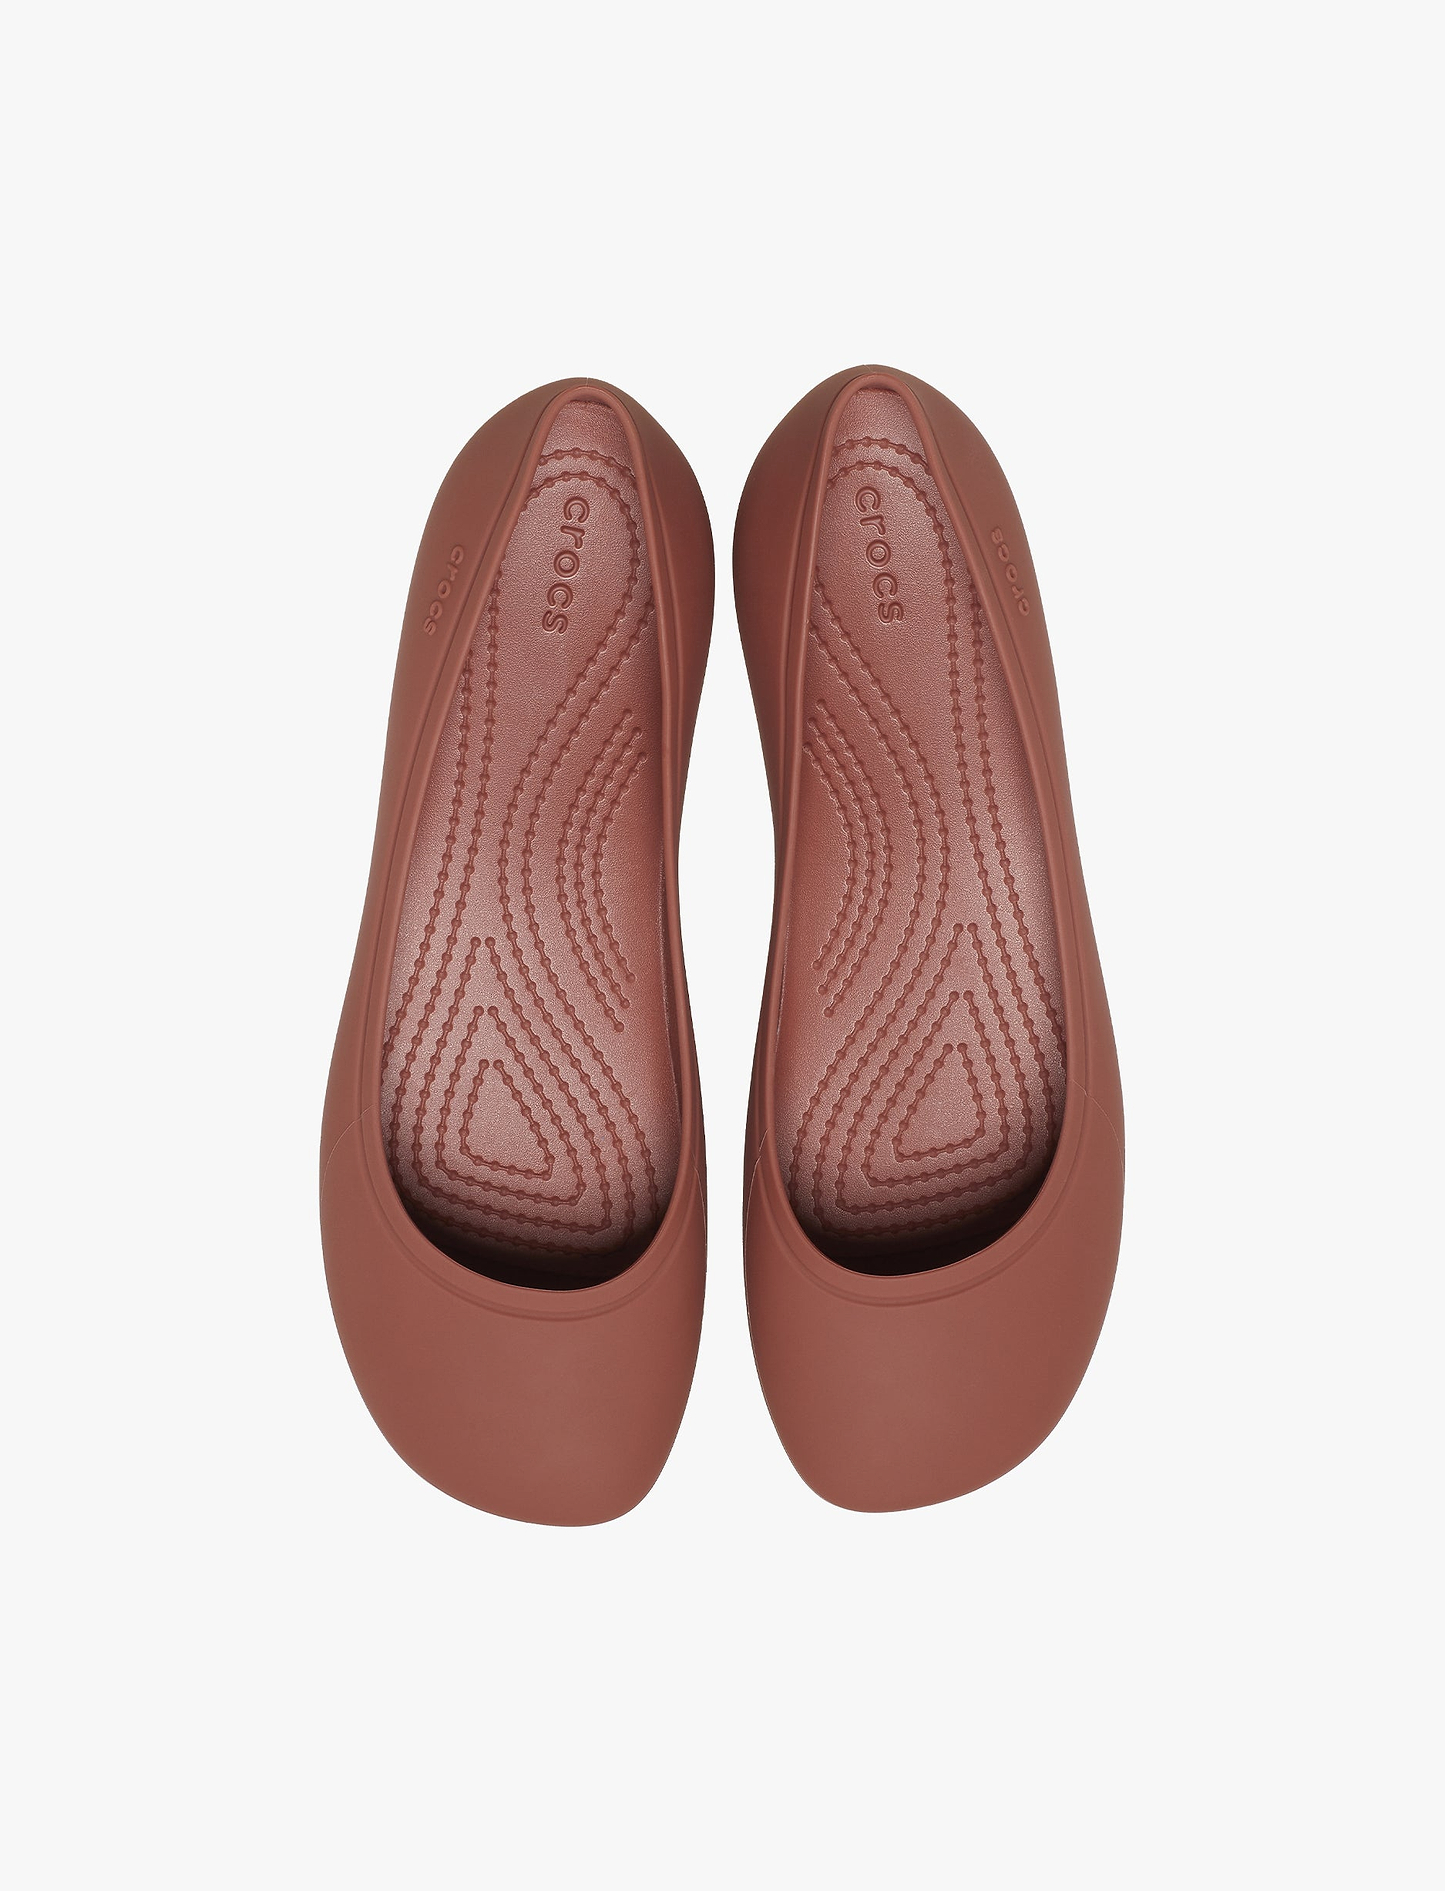 Crocs Brooklyn Flat - נעלי קרוקס שטוחות לנשים בצבע חום ספייס